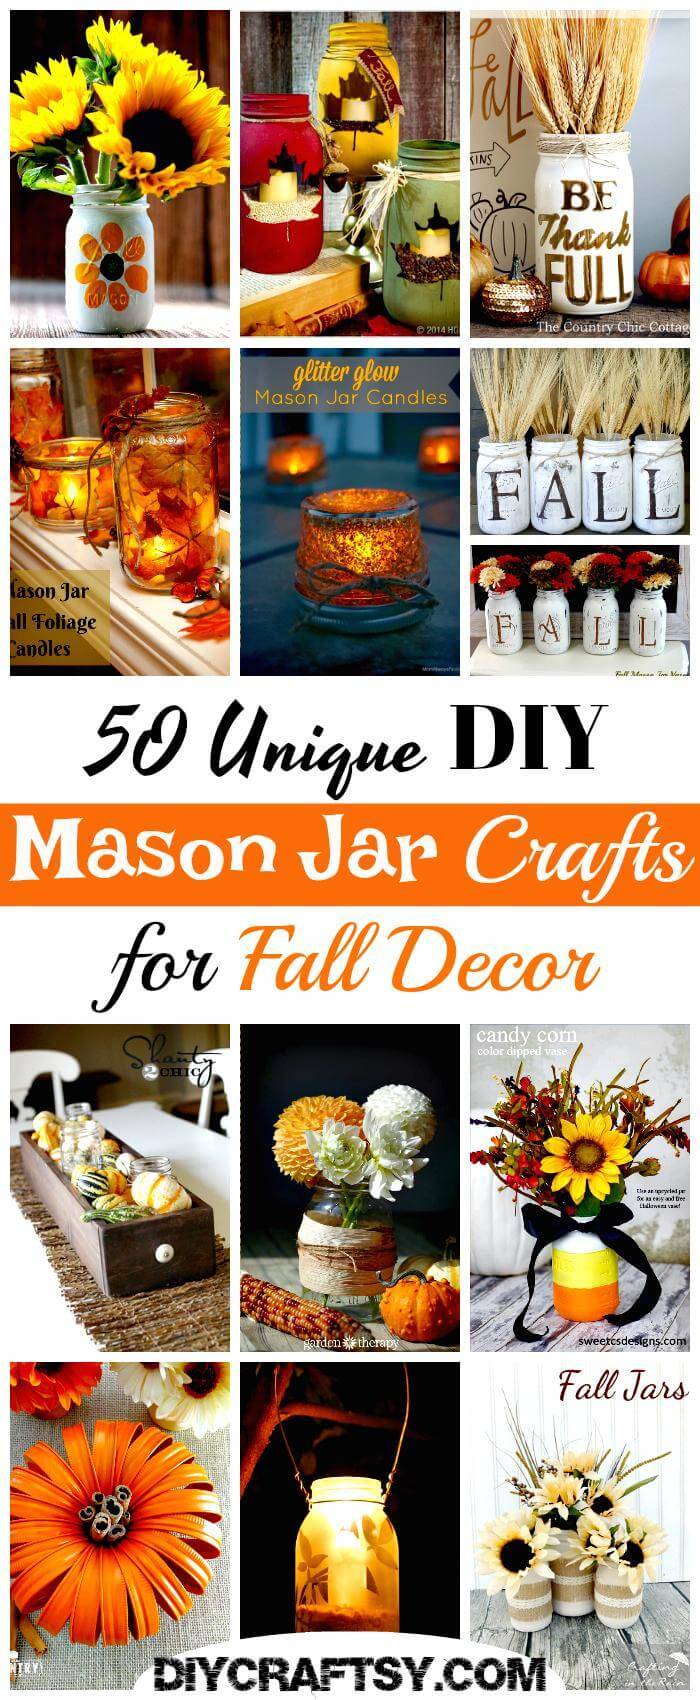 DIY Mason Jar Crafts for Fall Decor - DIY Fall Decor Crafts - Mason Jar Fall Decor Ideas